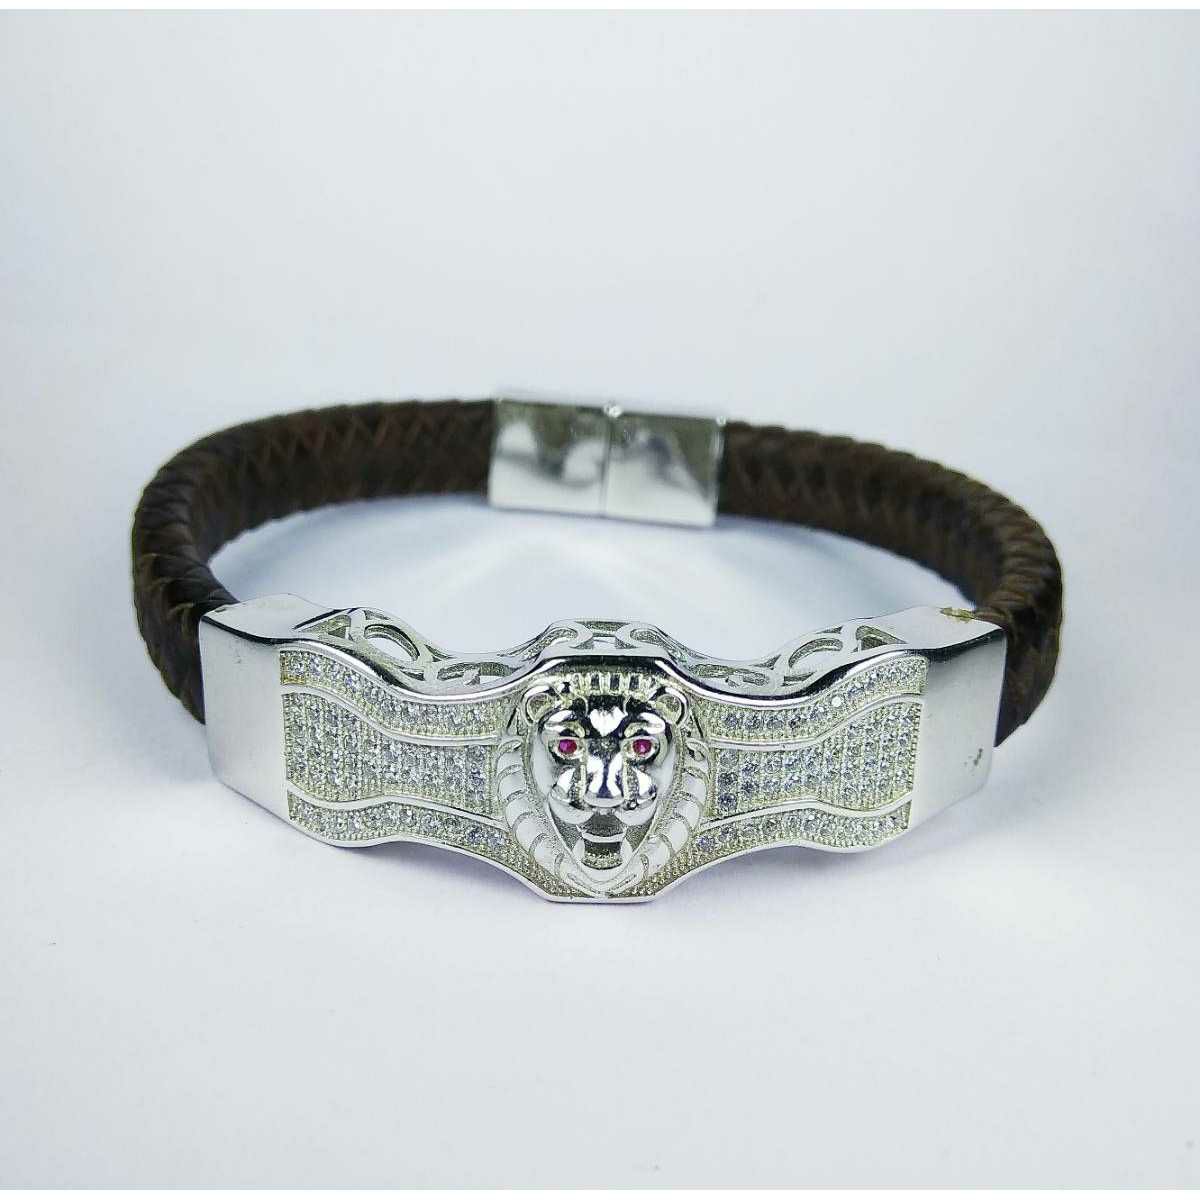 Fancy 925 Silver Gents Bracelet With Lion Face